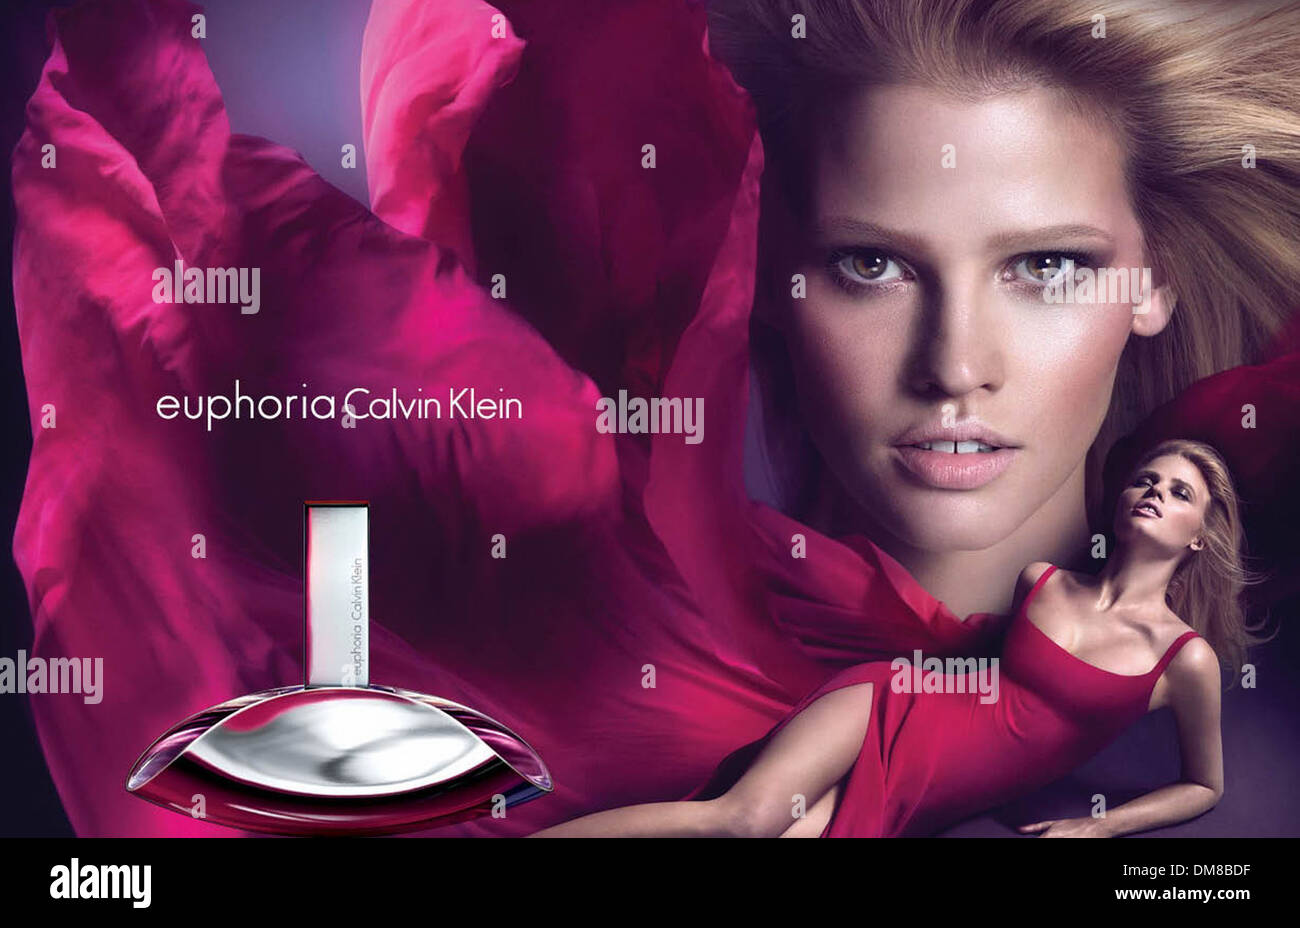 Lara Stone New Ad Campaign  Calvin Klein euphoria Featuring Supermodel and Calvin Klein Muse Lara Stone Stock Photo